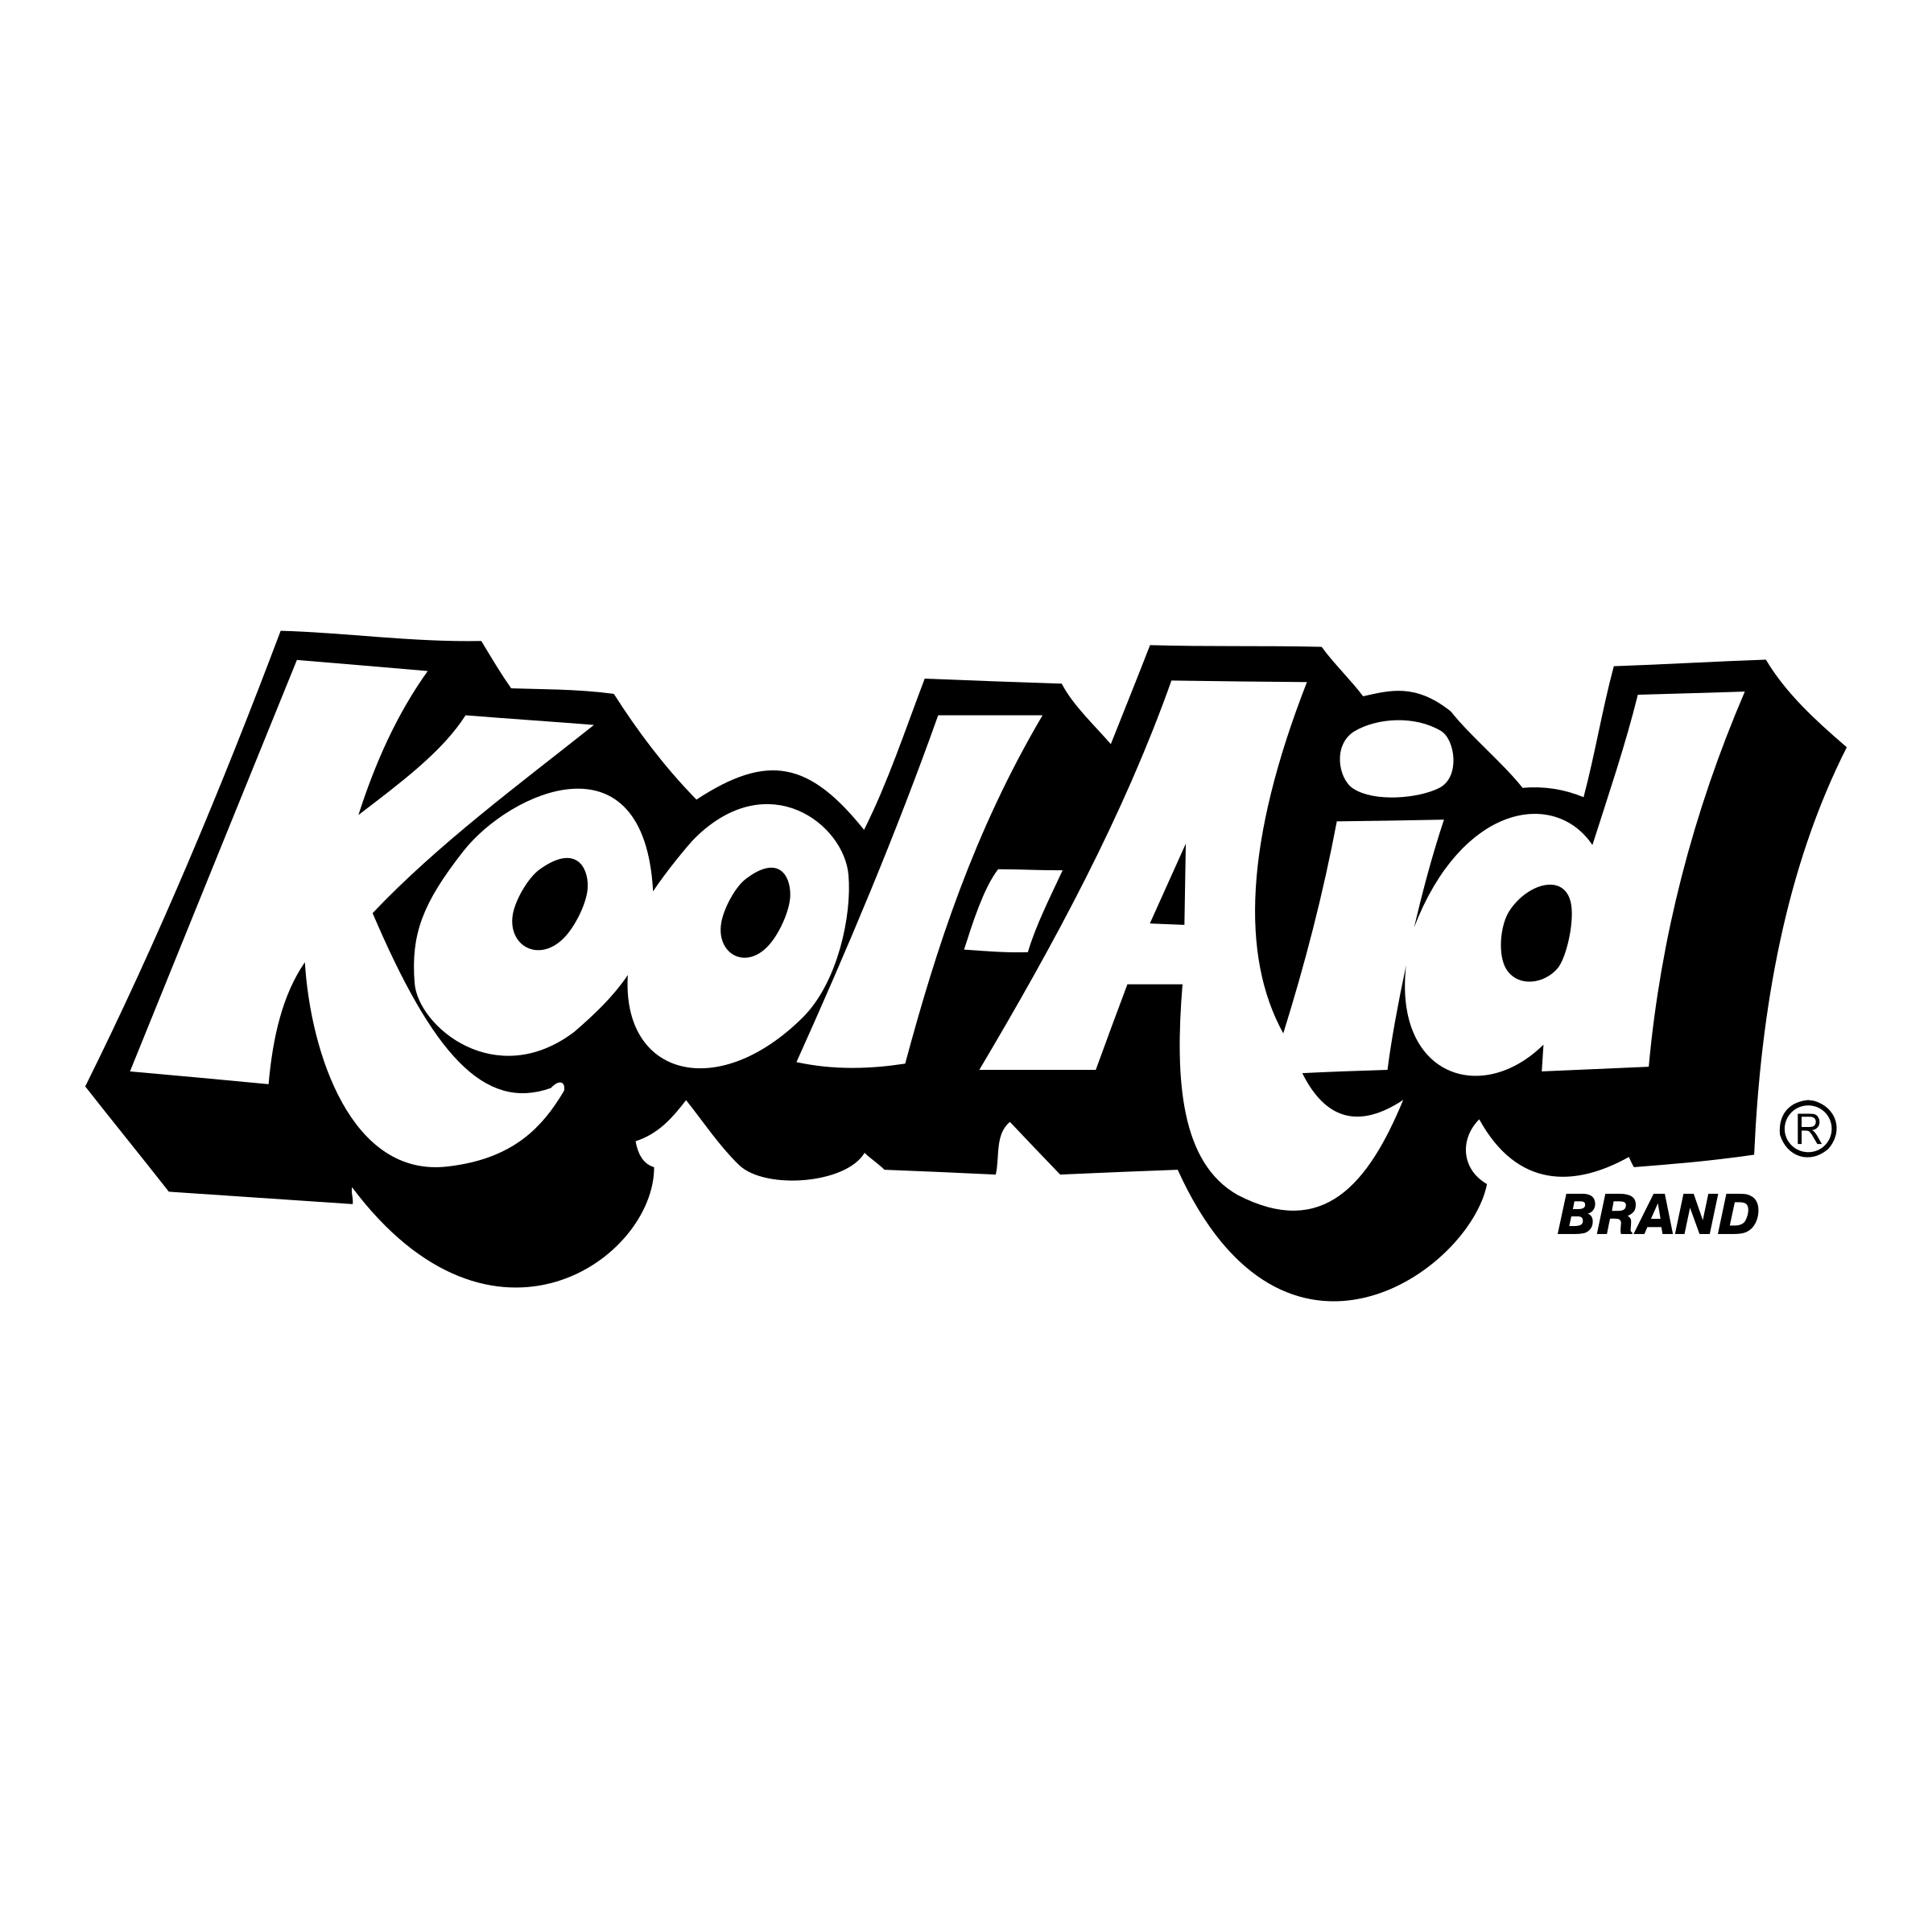 Kool-Aid Logo - Kool Aid Logo PNG Transparent & SVG Vector - Freebie Supply